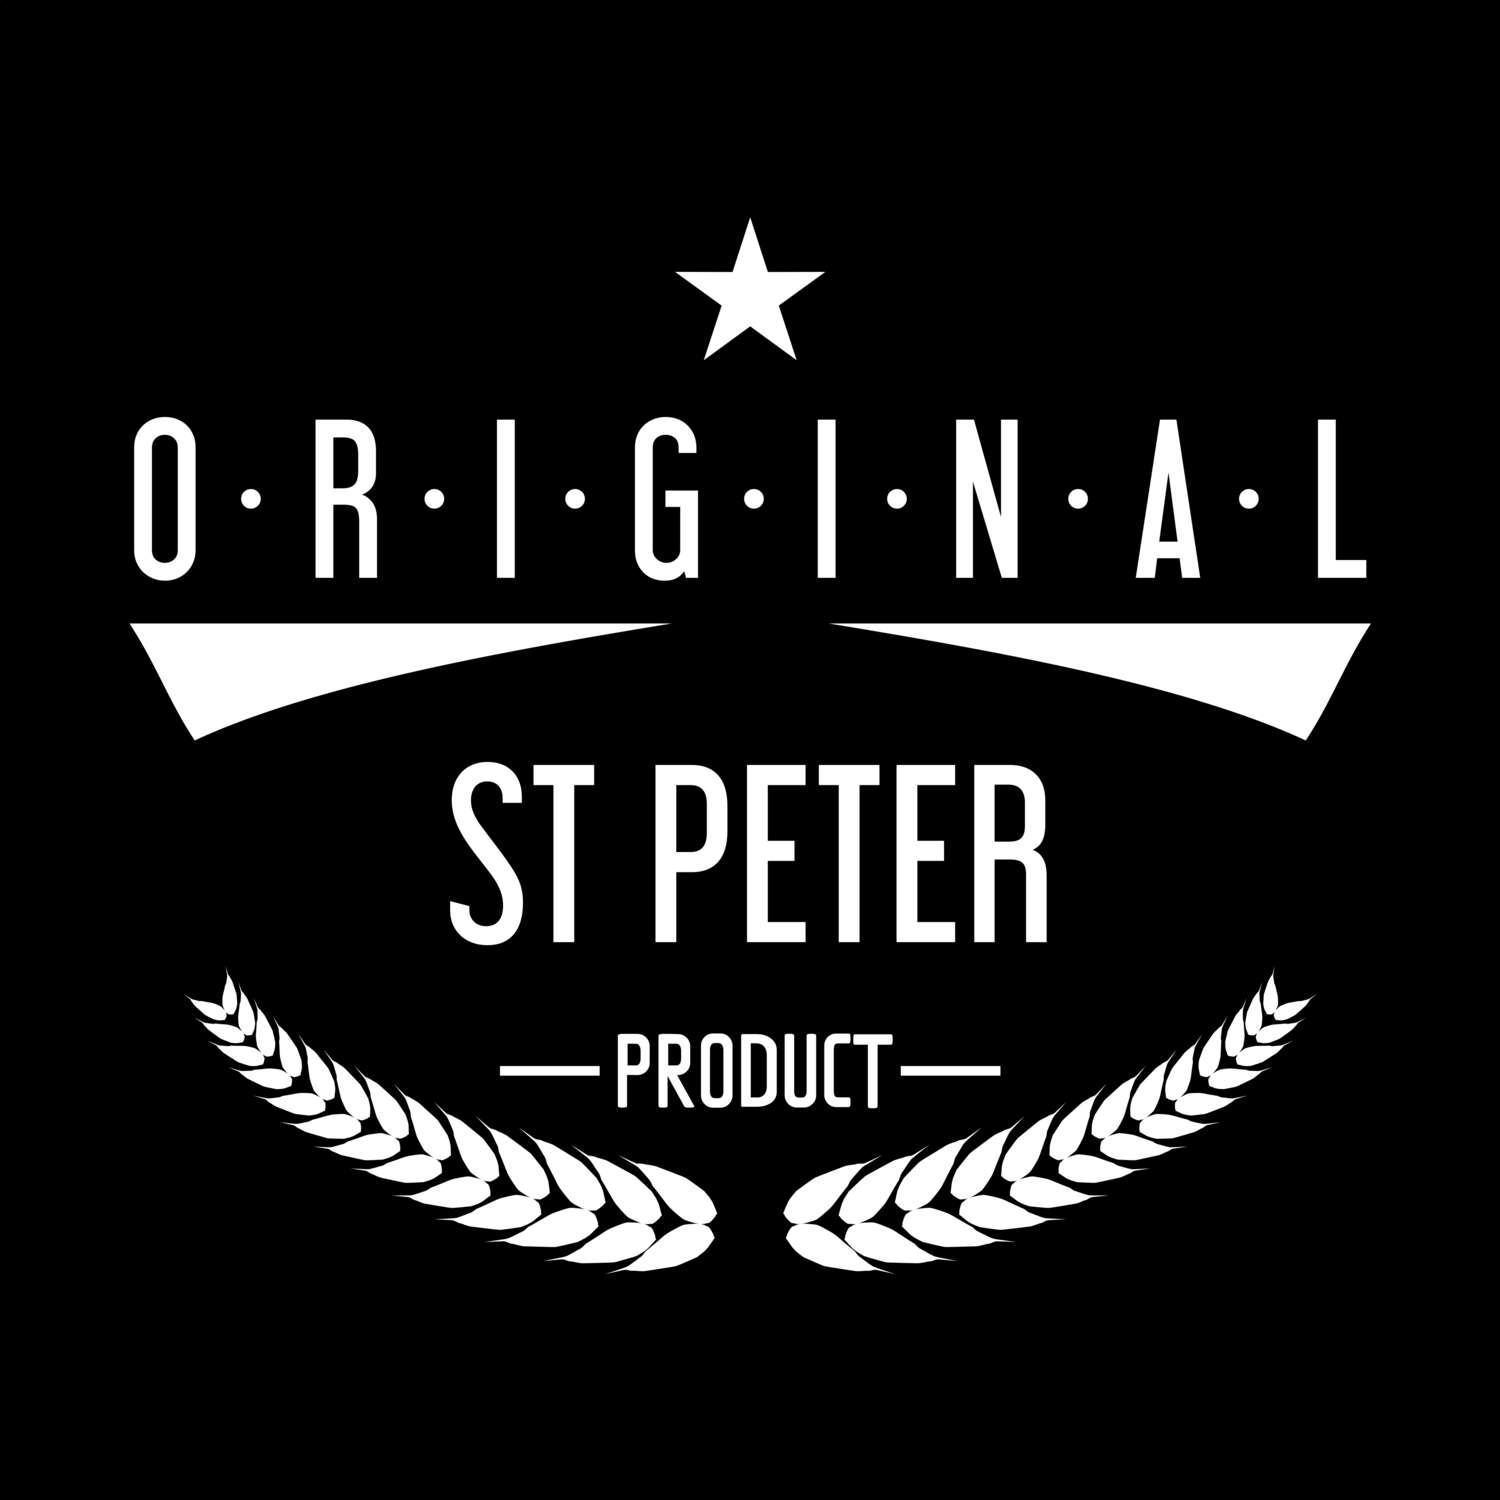 St Peter T-Shirt »Original Product«